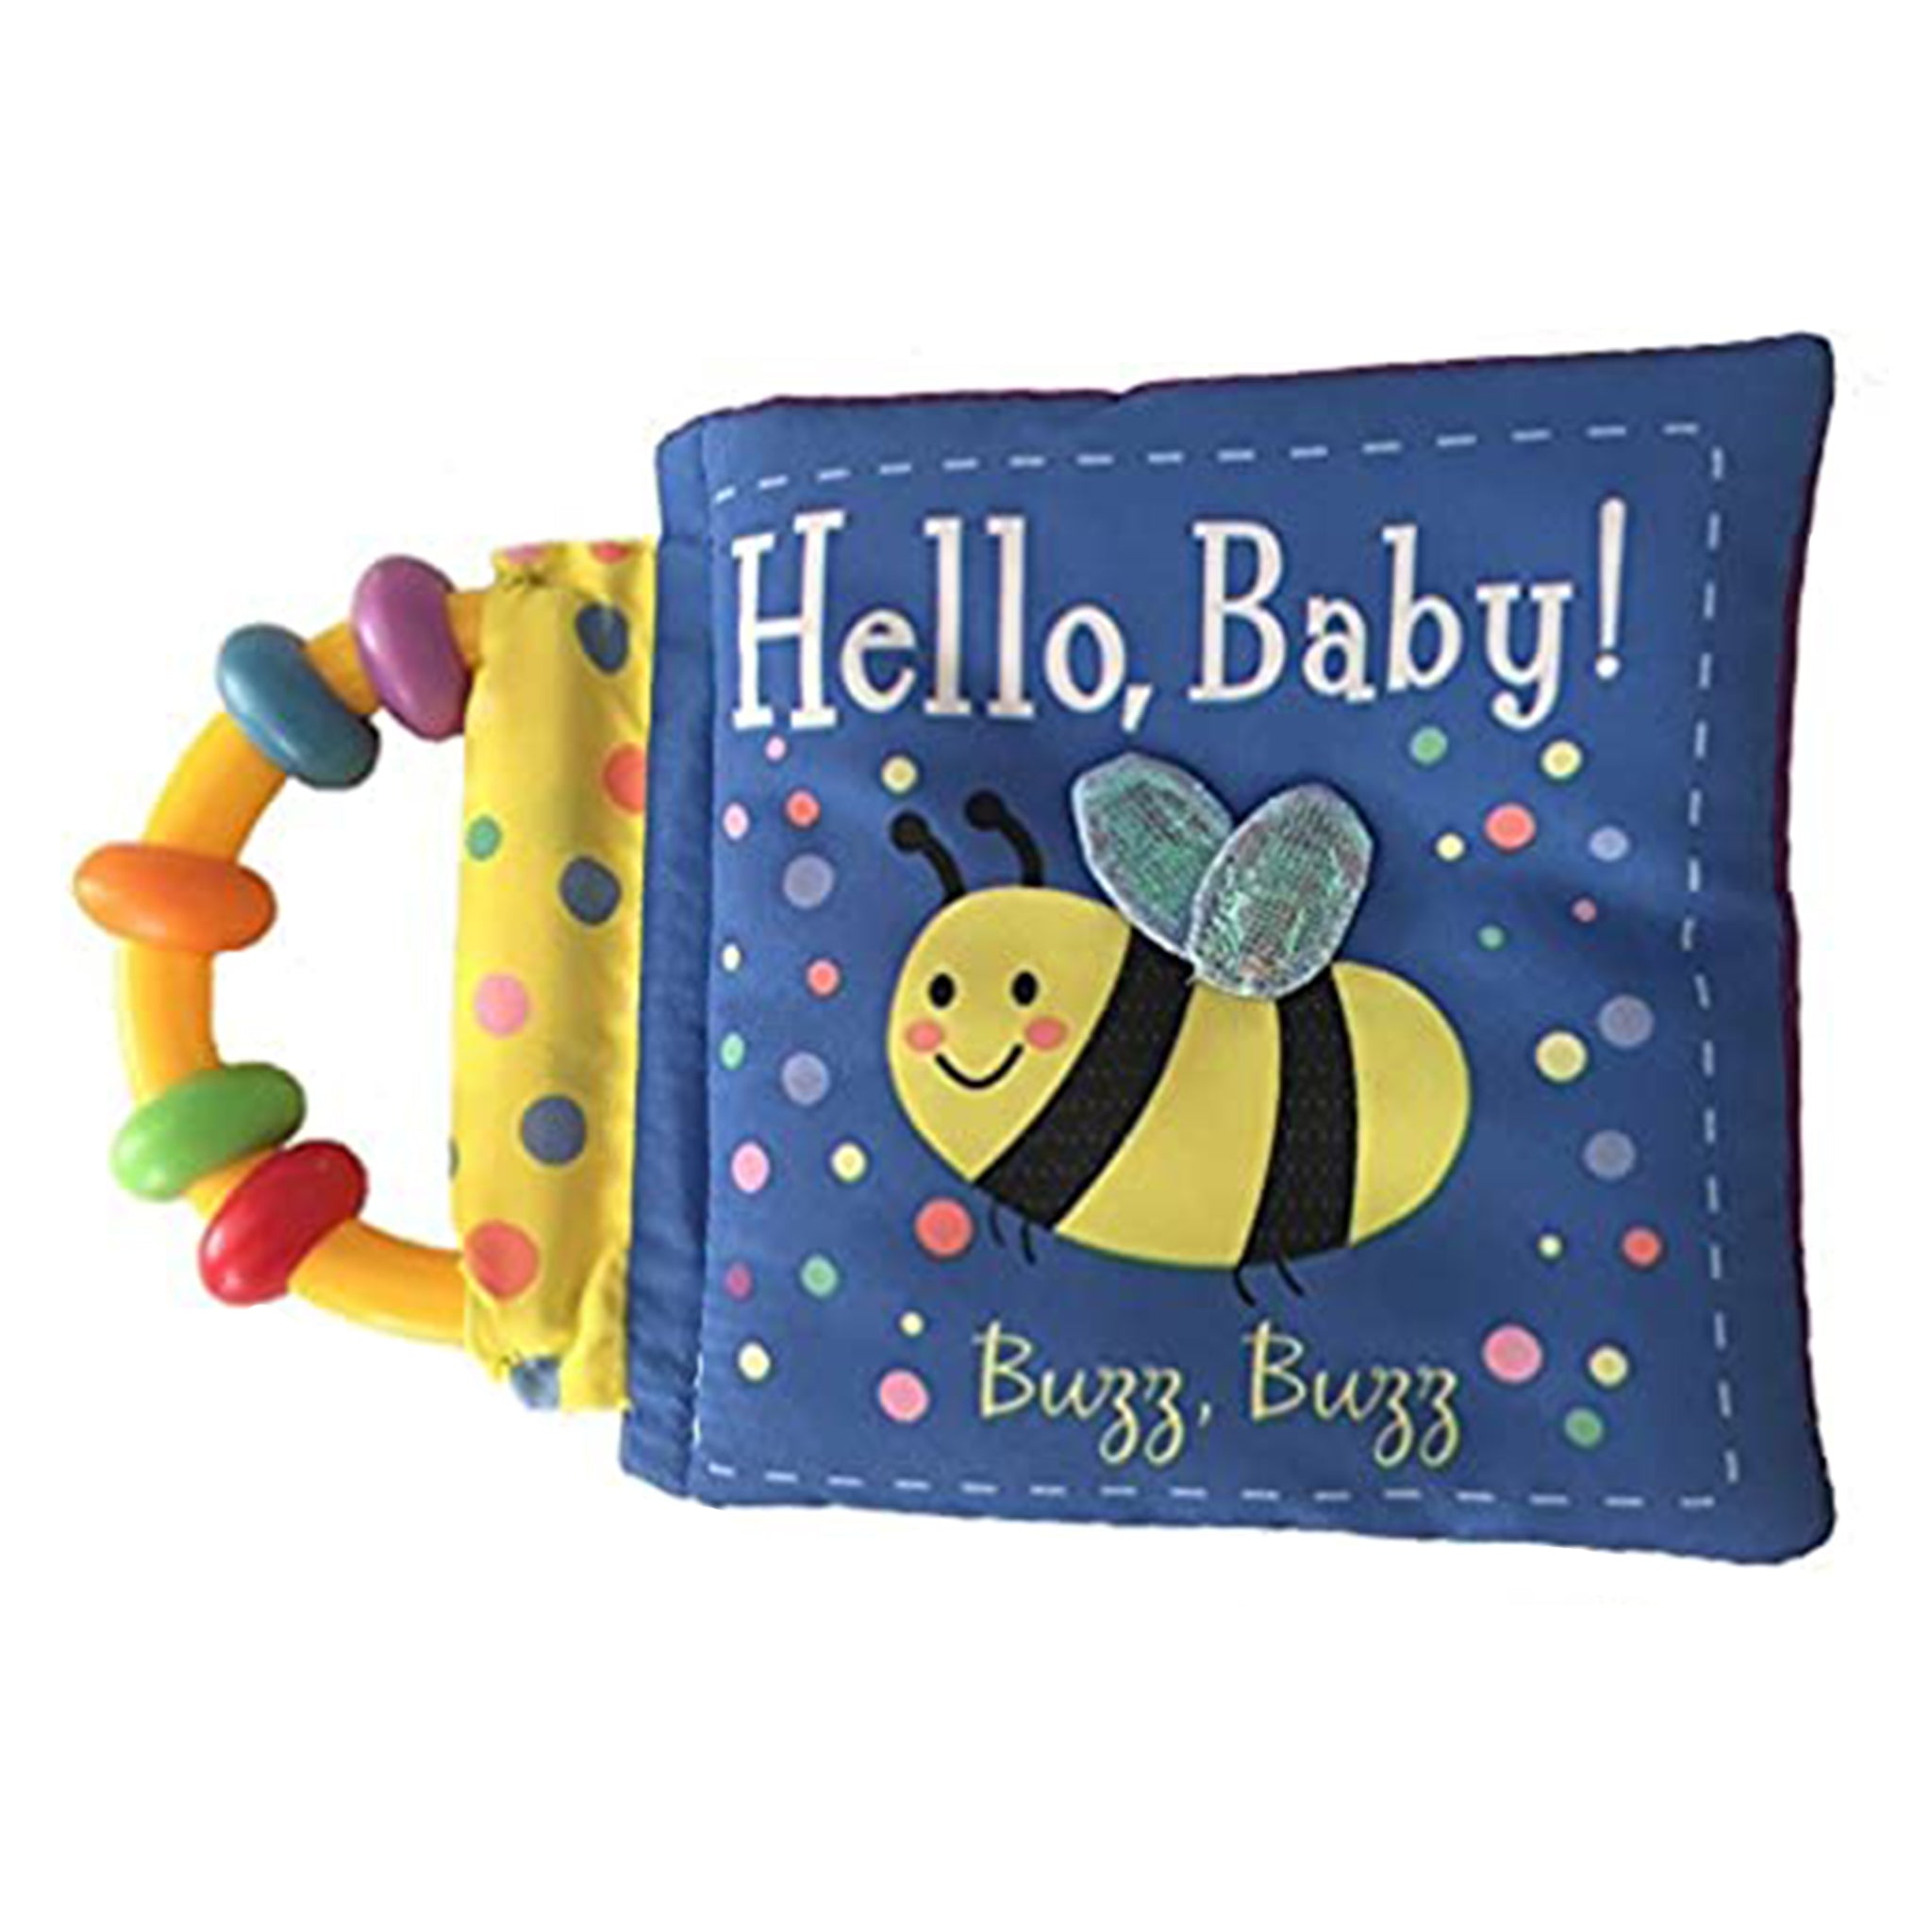 Hello, Baby! Buzz, Buzz Book (Birth+)